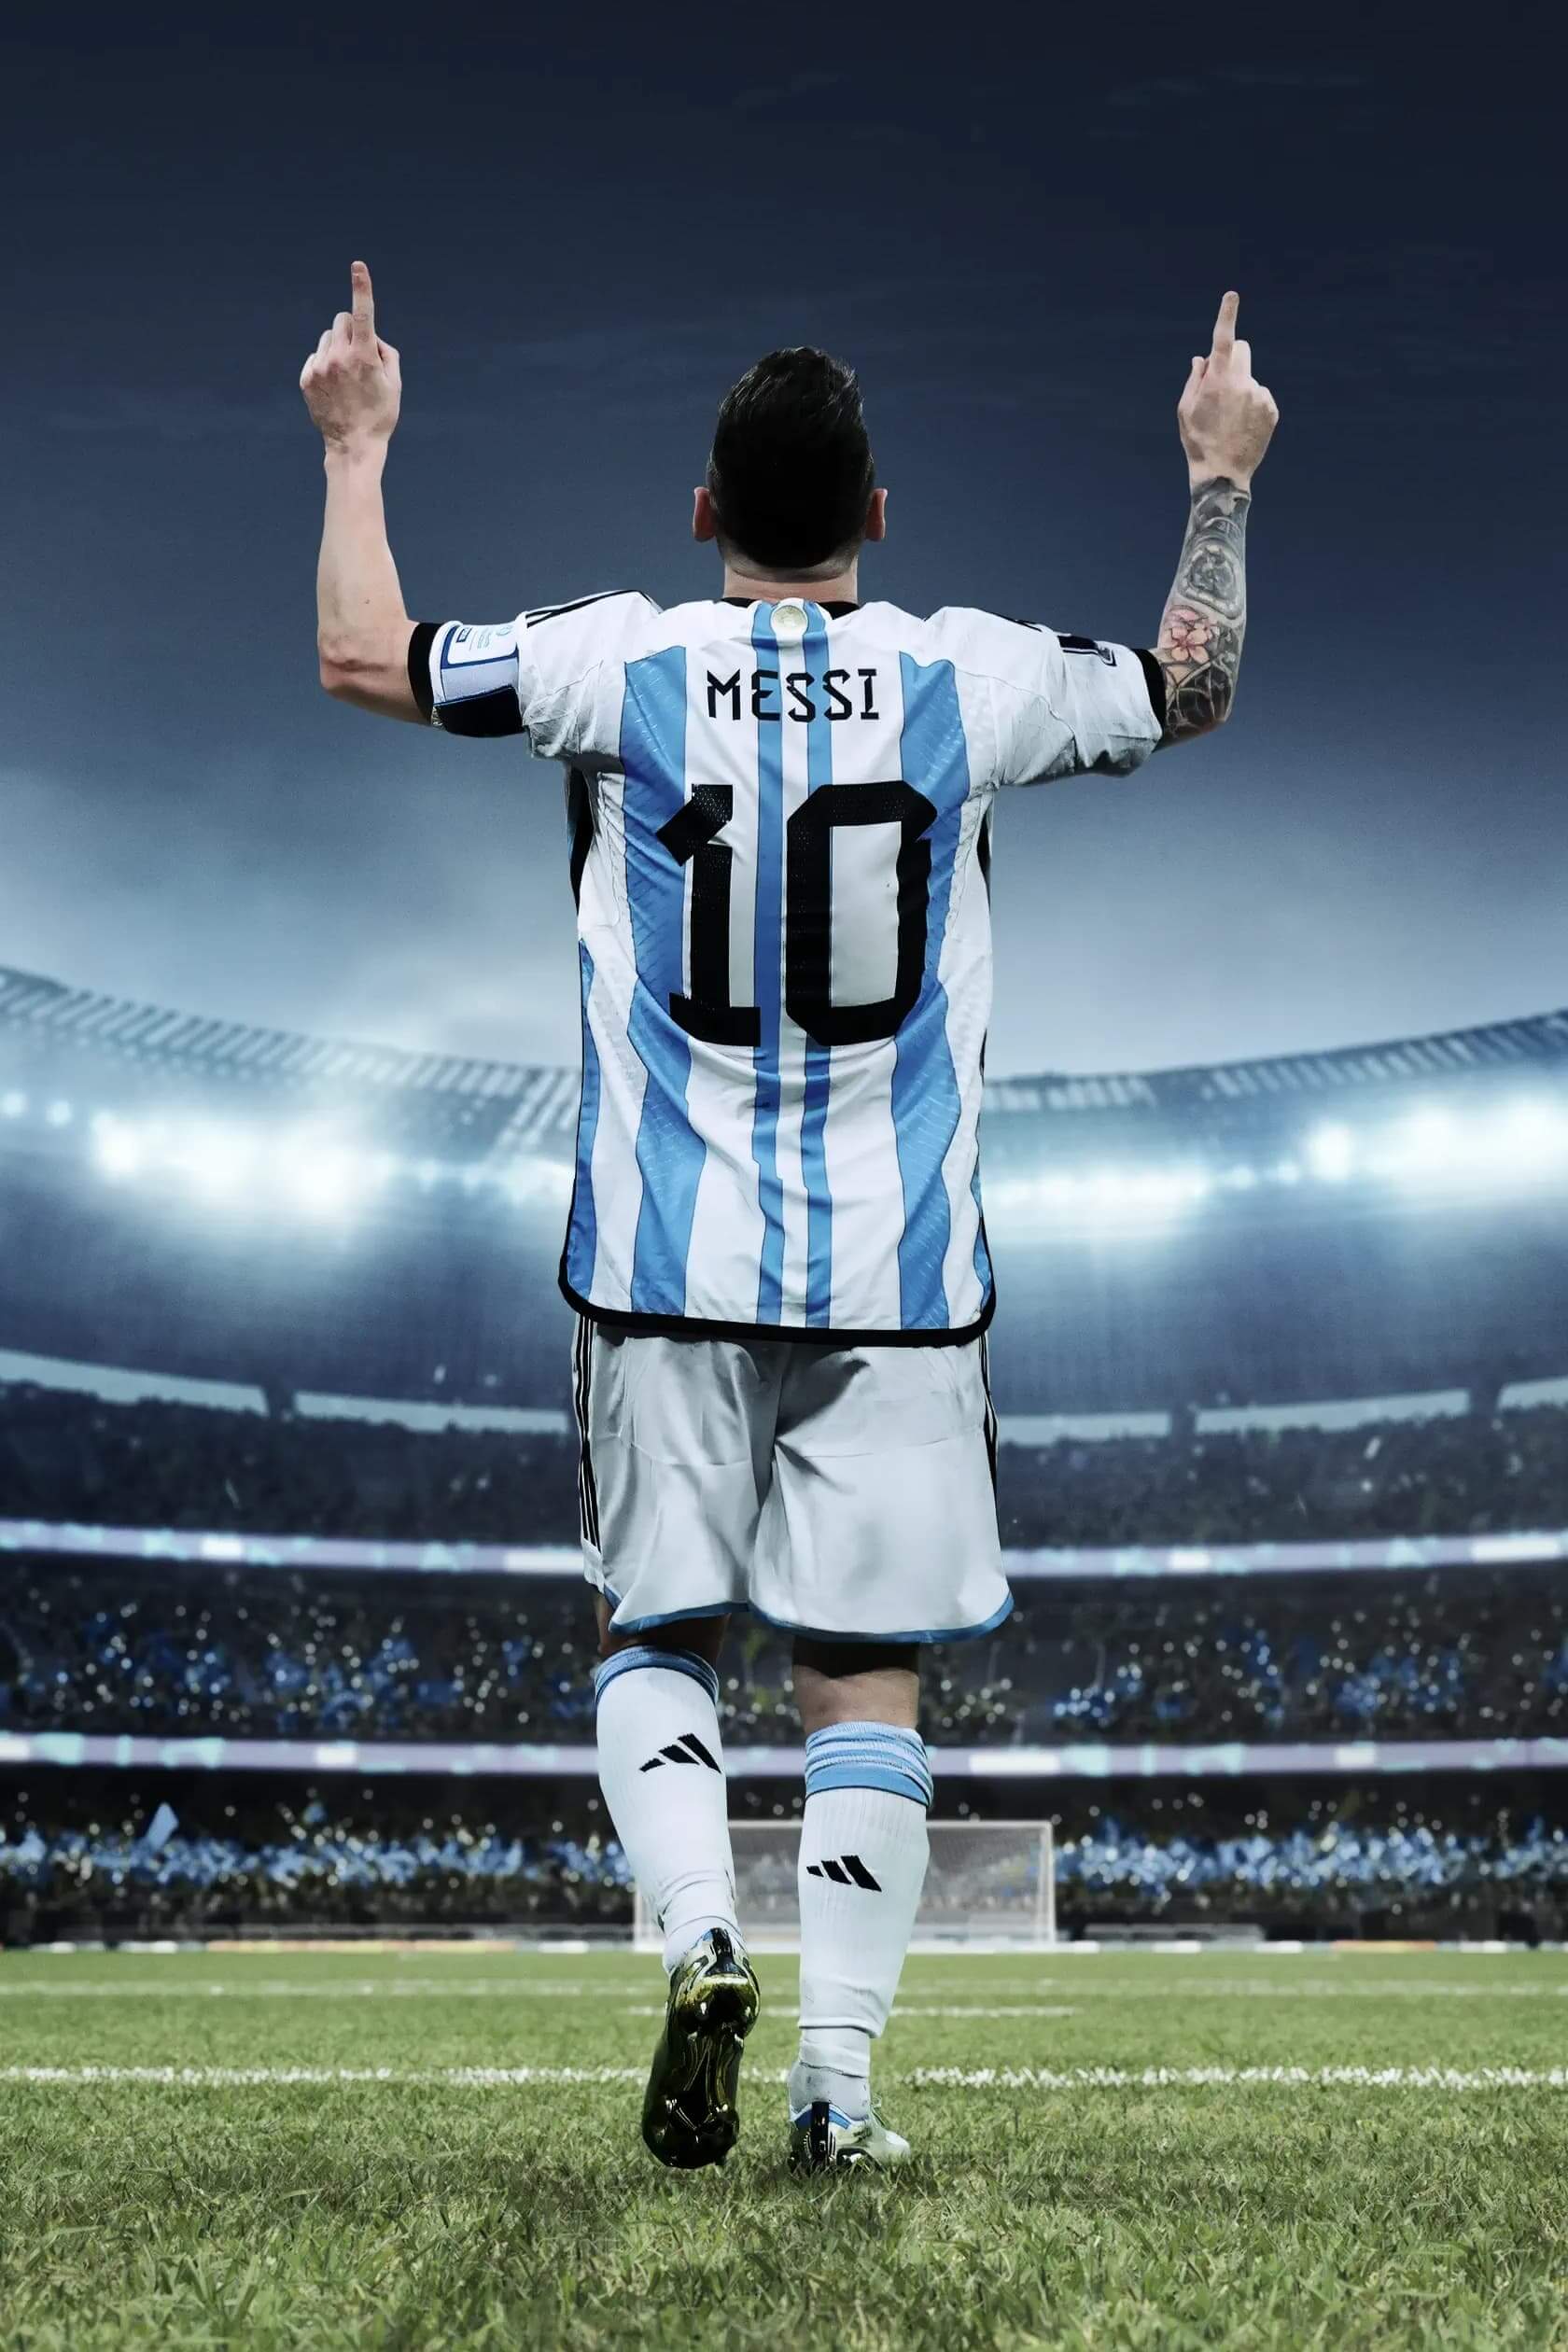 جام جهانی مسی: ظهور یک افسانه (Messi’s World Cup: The Rise of a Legend)